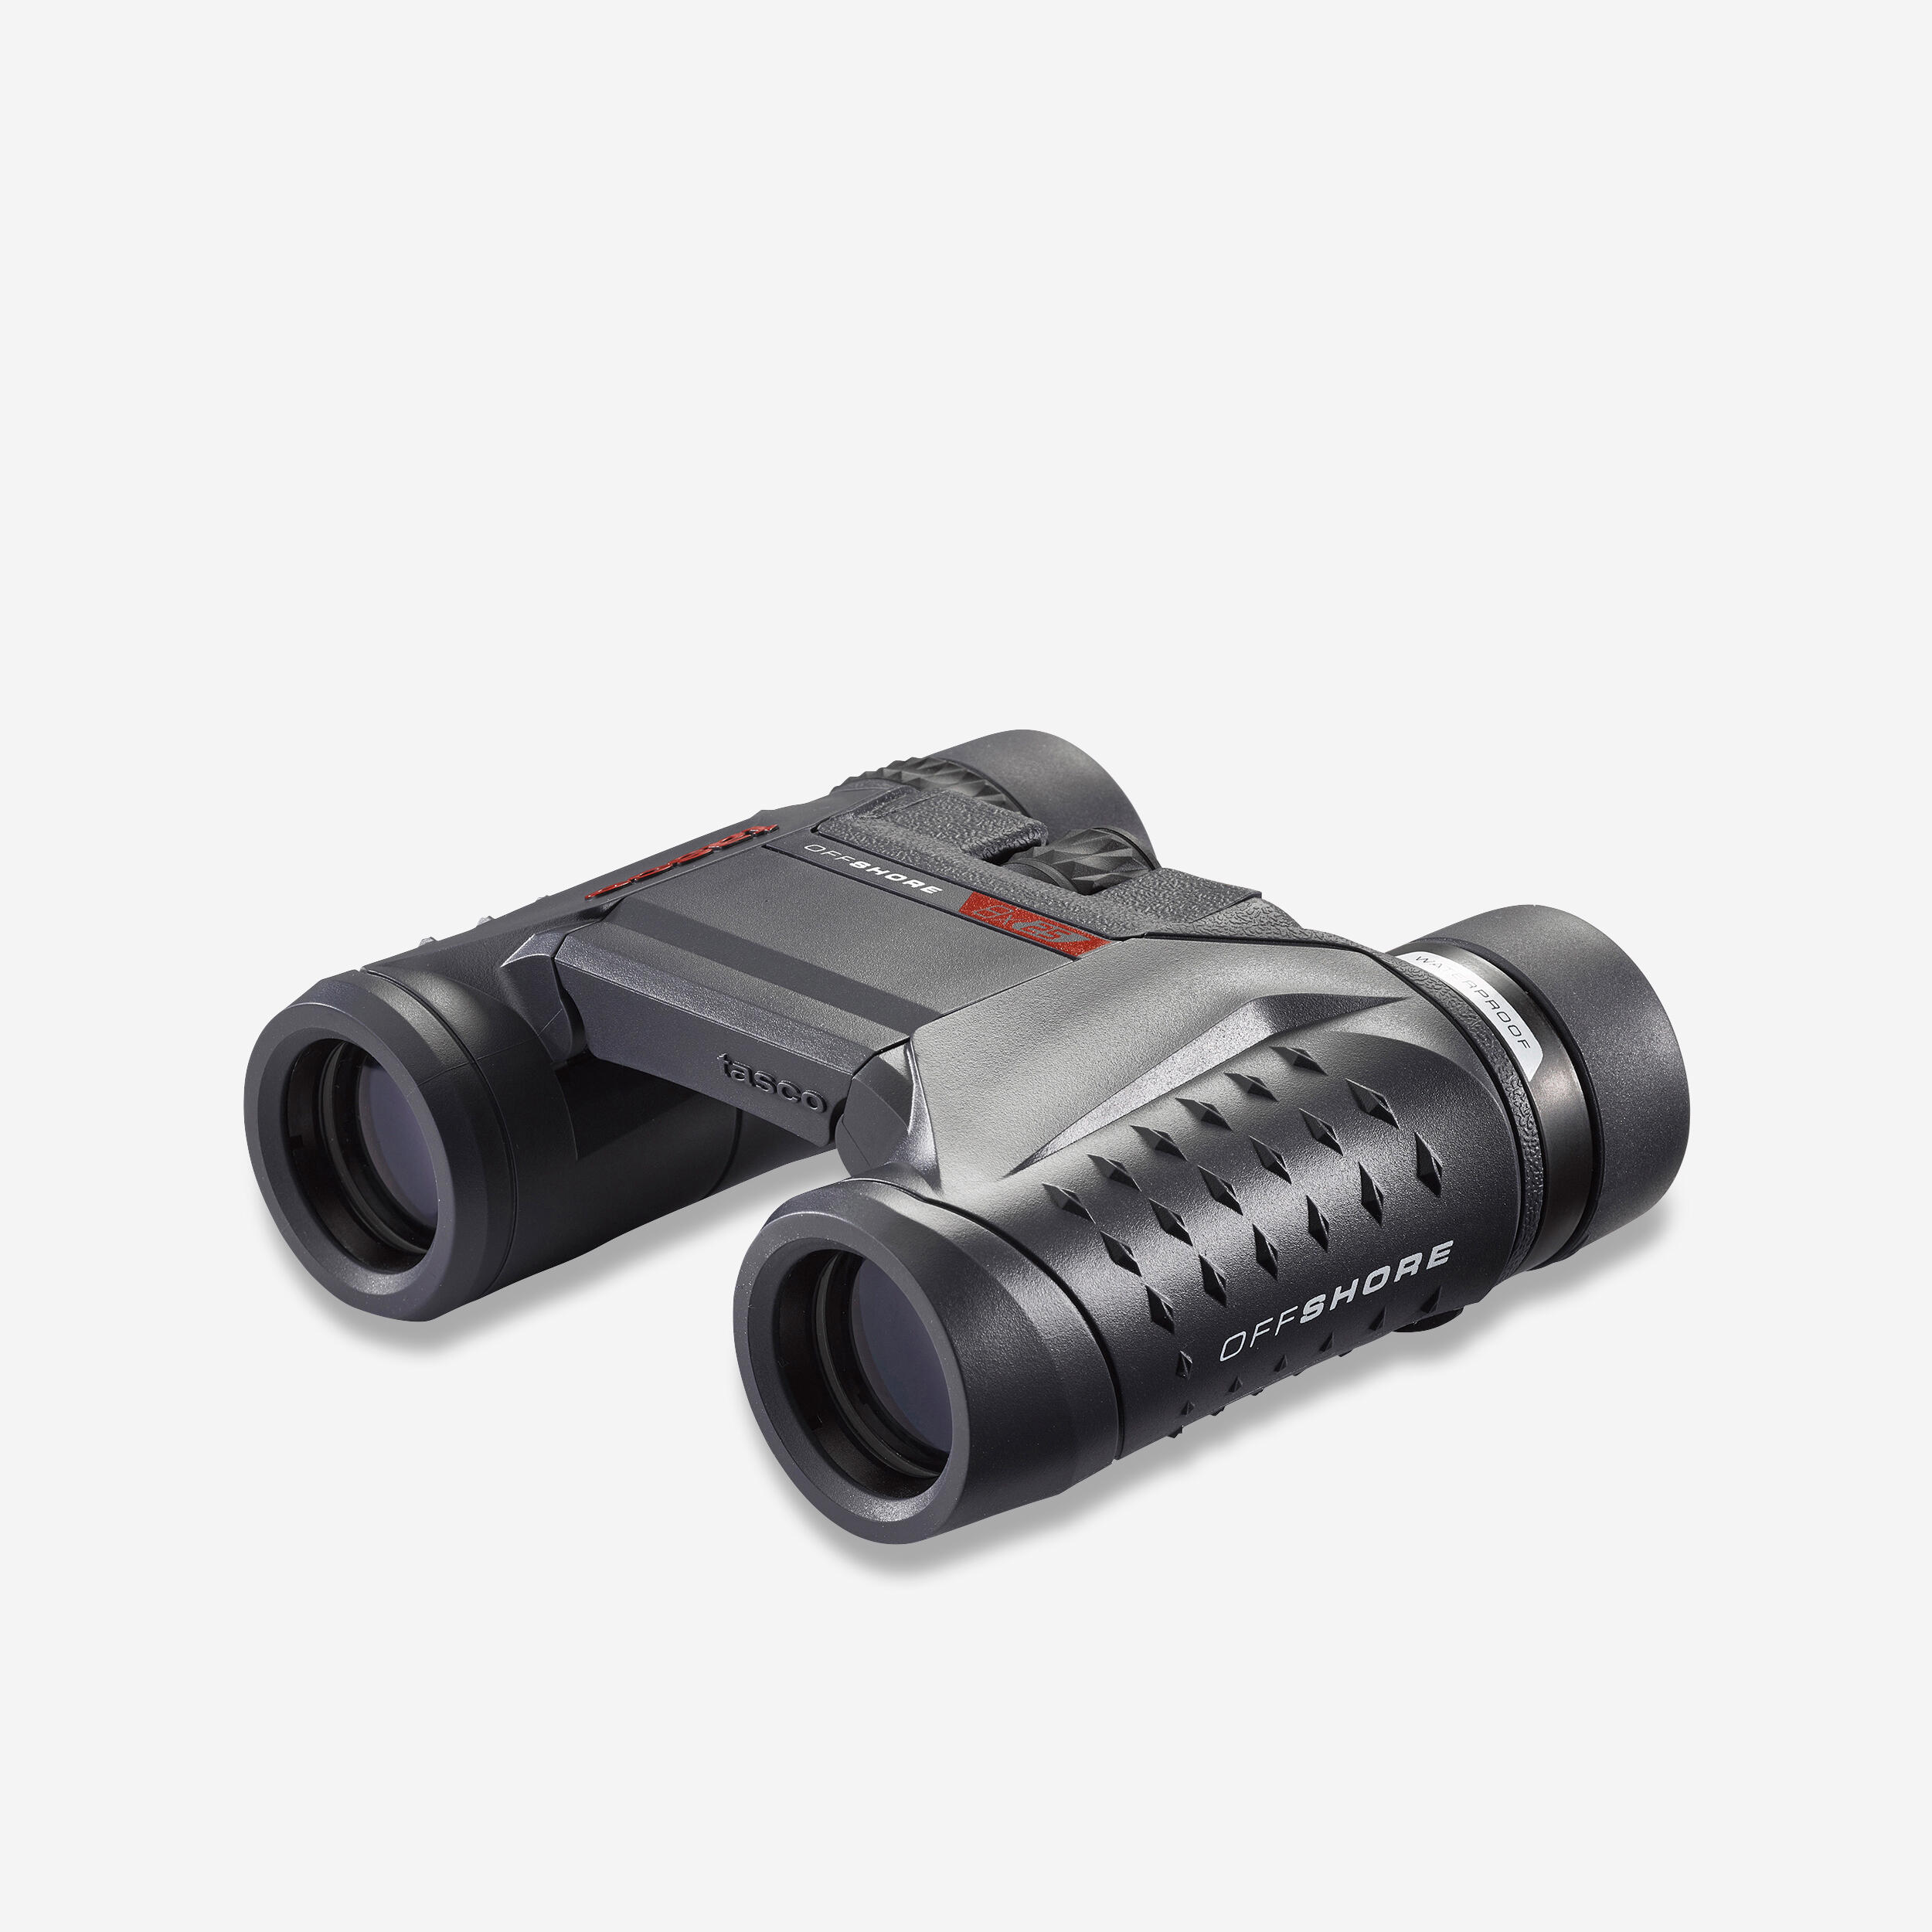 Adult Adjustable Hiking Binoculars Magnification x8 - Tasco Offshore 1/3